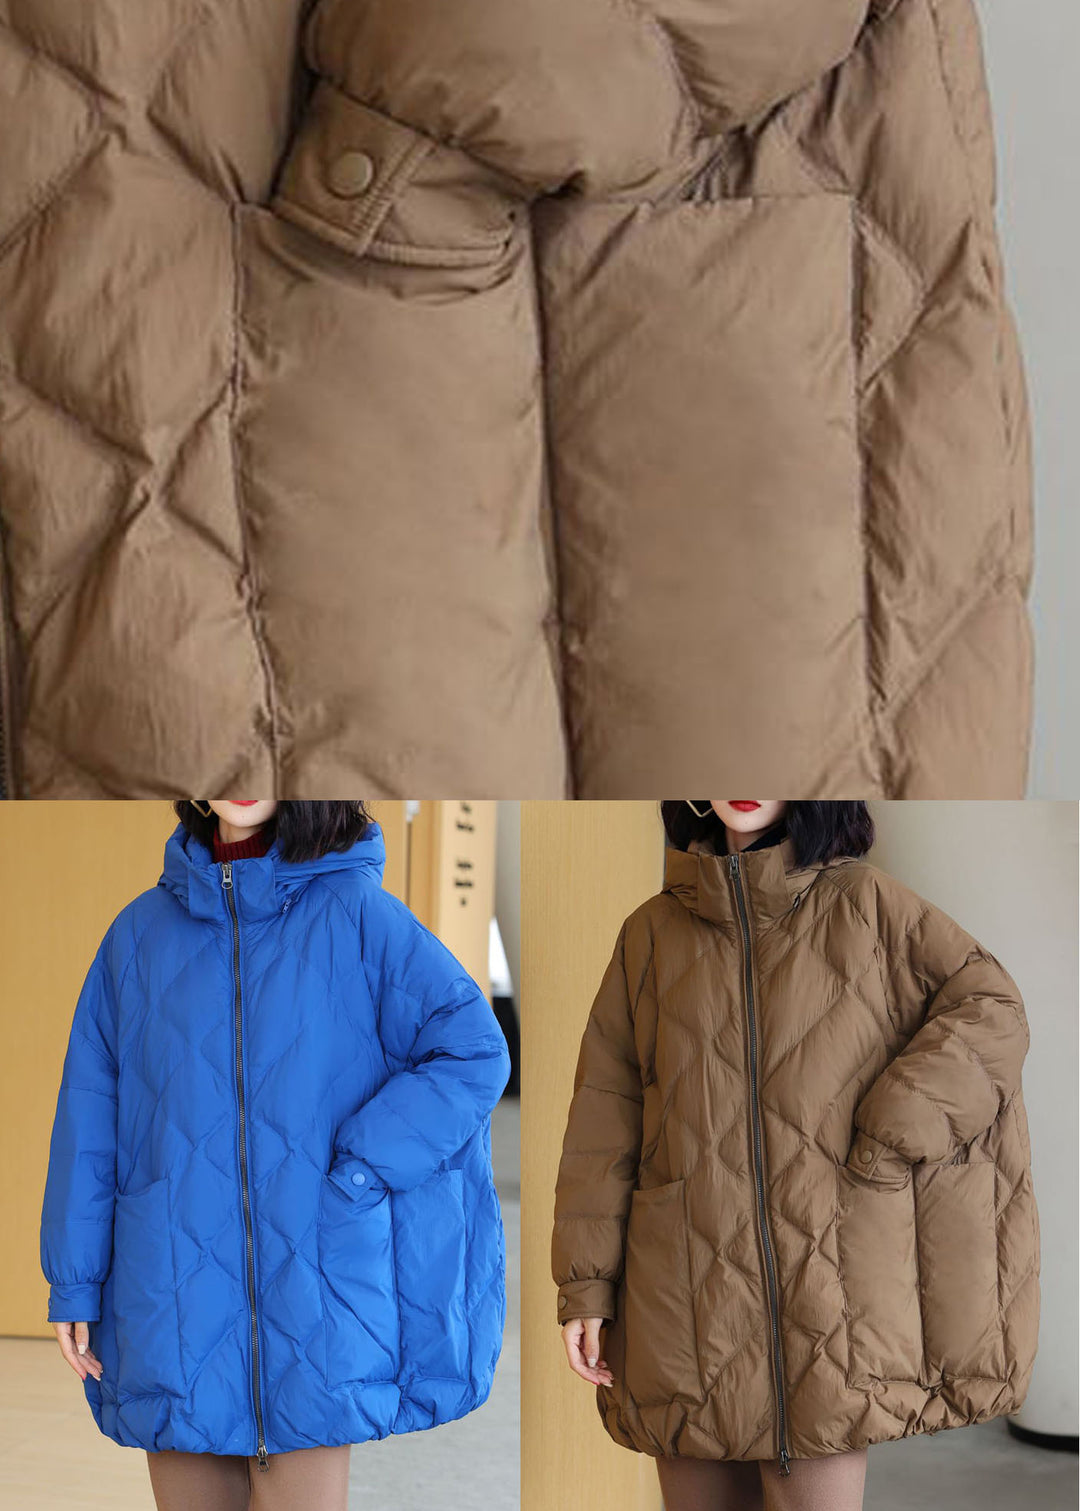 Style Blue Hooded Oversized Duck Down Puffer Jacket Winter